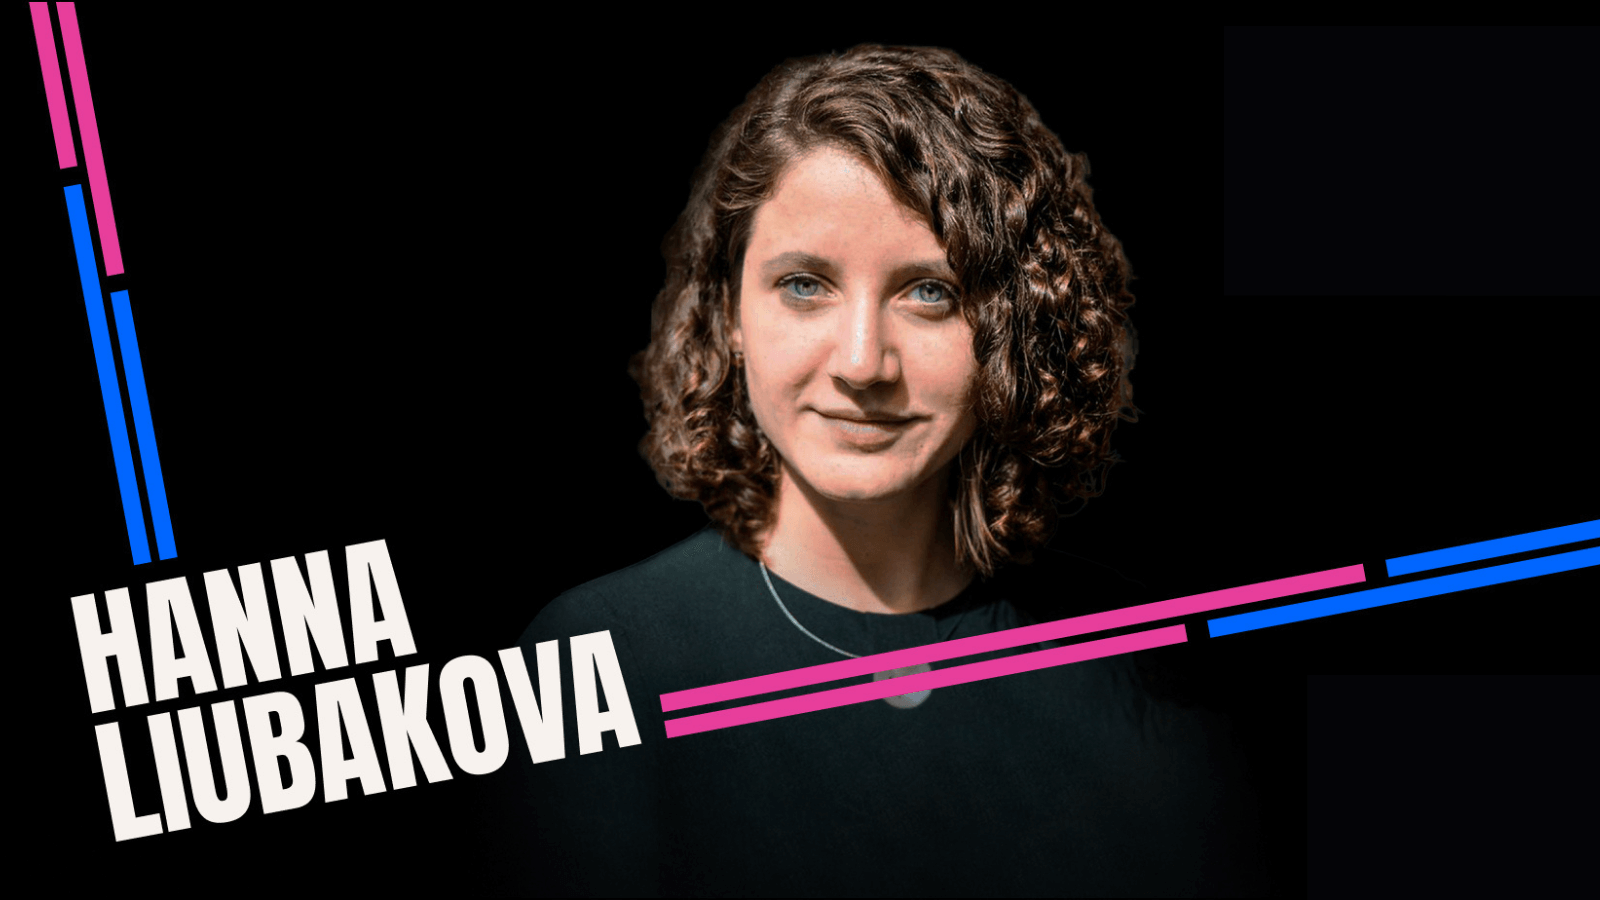 Meet Oslo Freedom Forum Speaker Hanna Liubakova